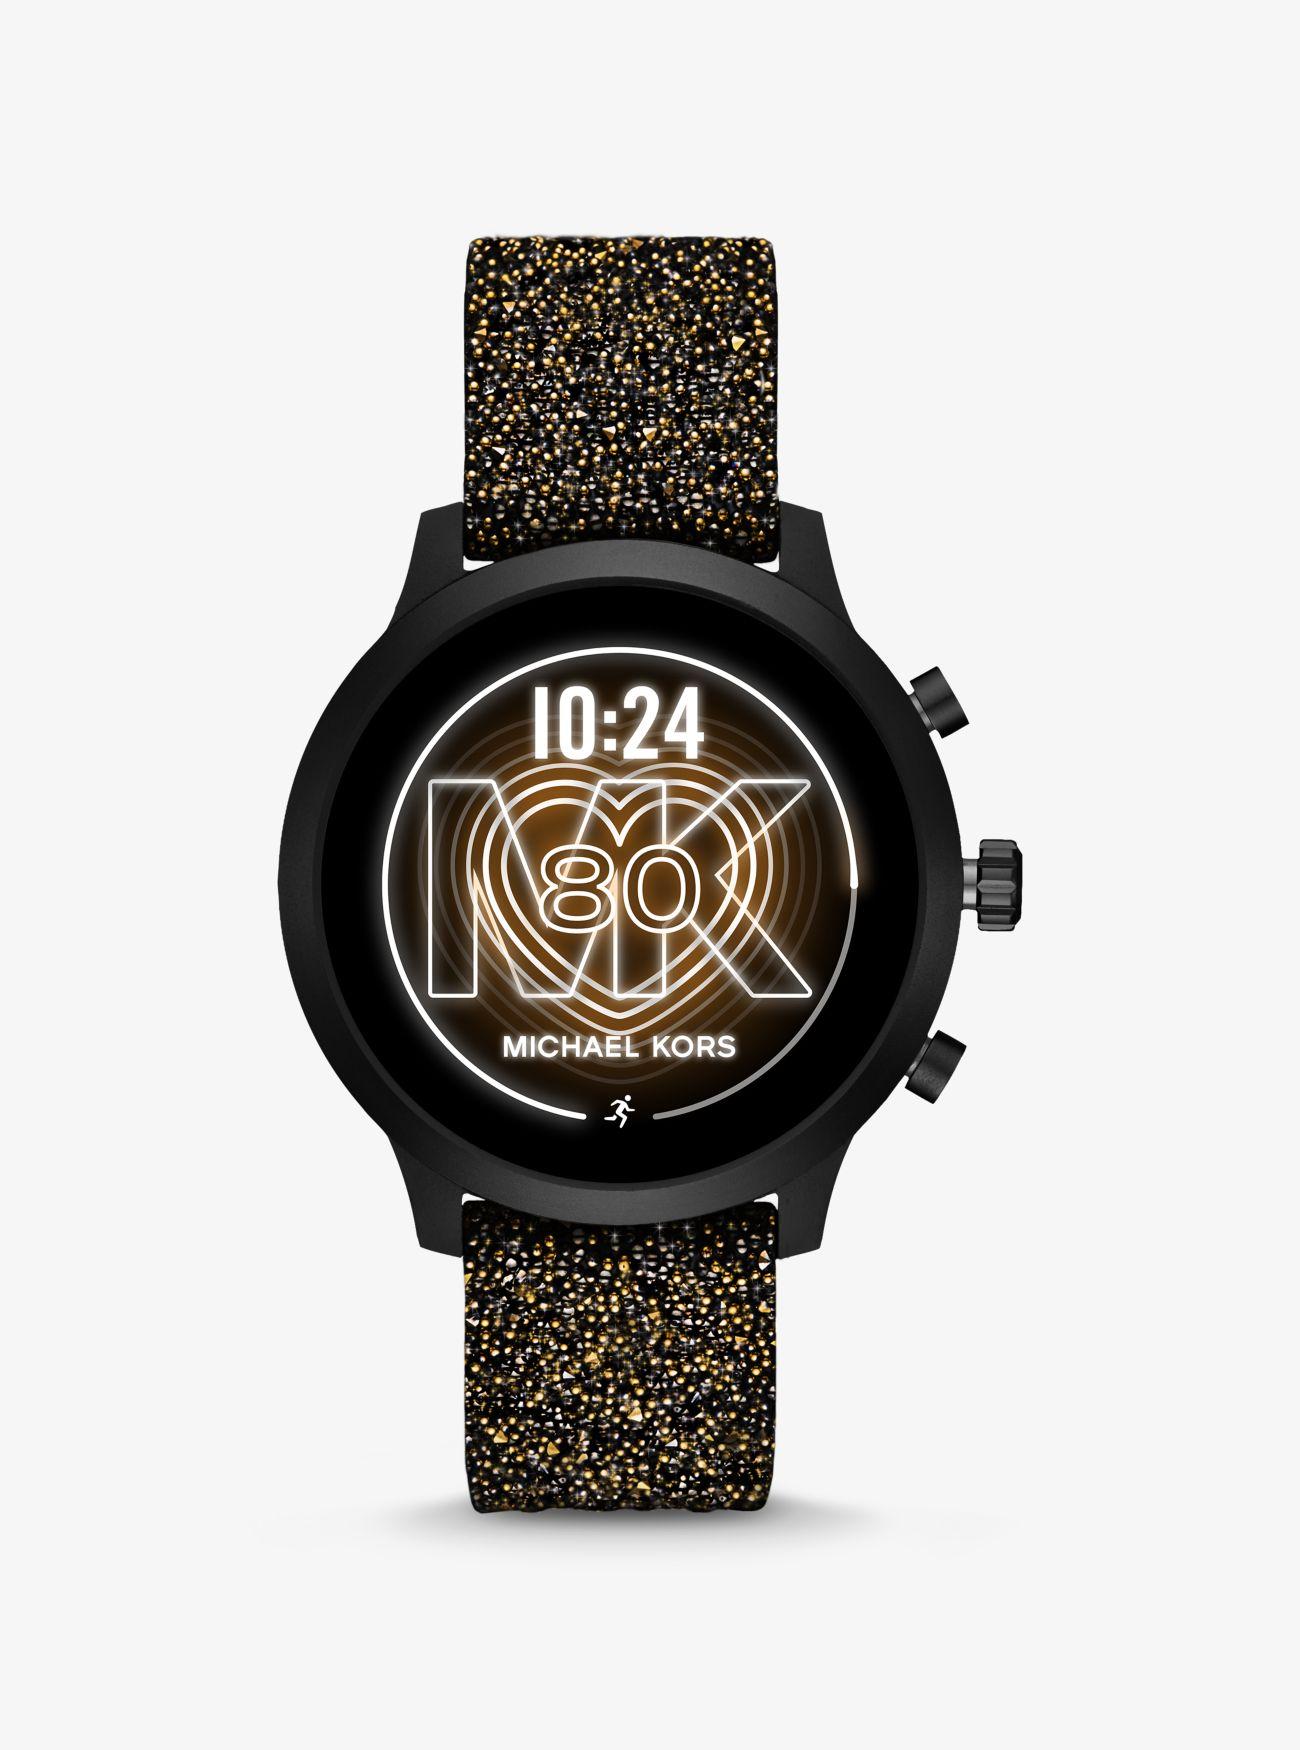 Michael Kors Synthetic Touchscreen (model: Mkt5093) in Black,Gold 